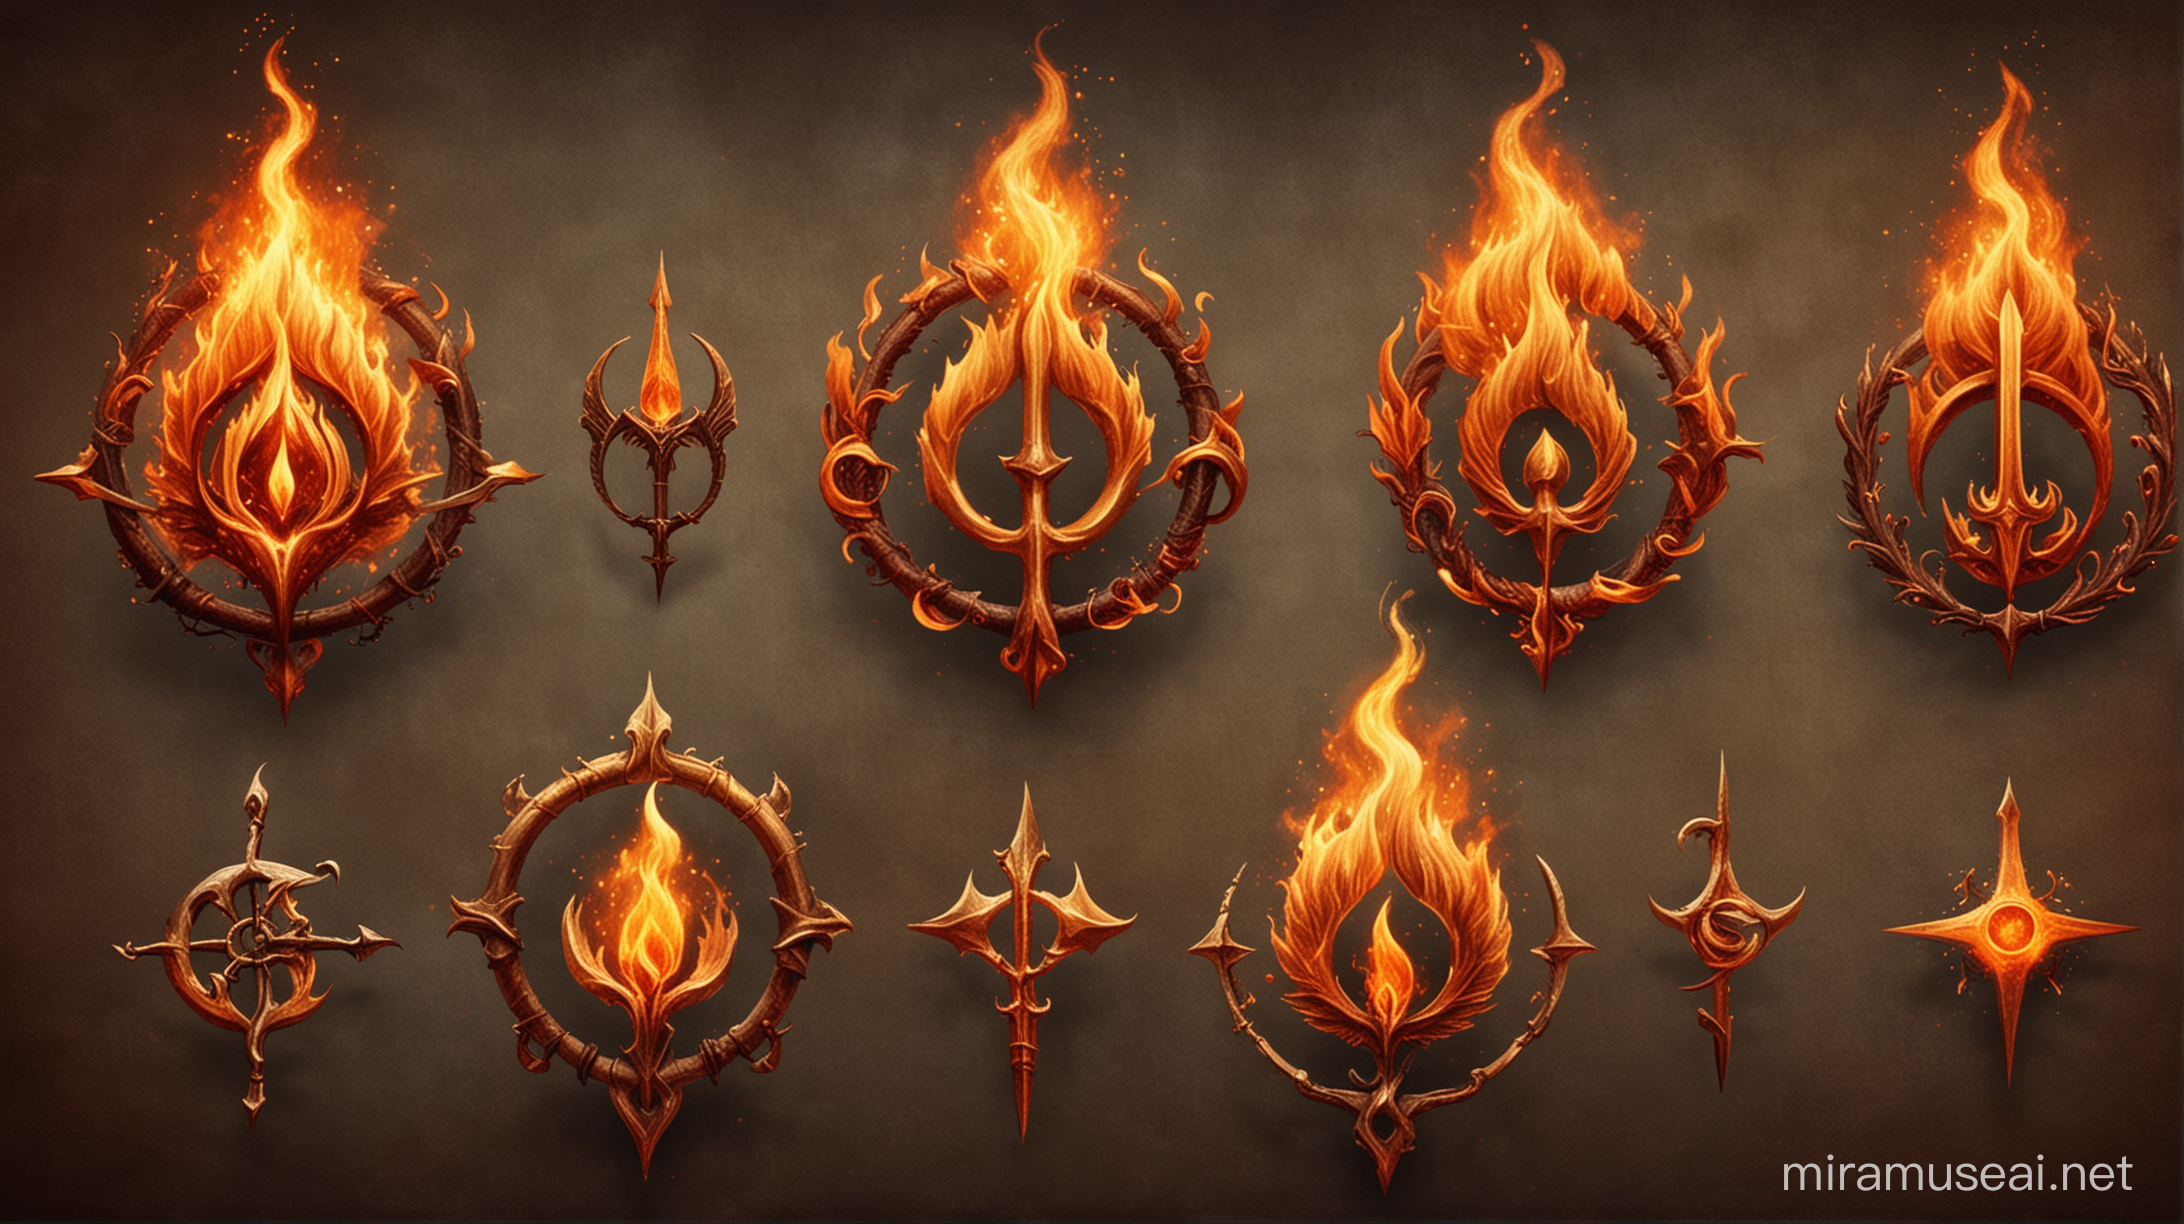 Five EqualSized Fantasy Fire Symbols in Vibrant Display